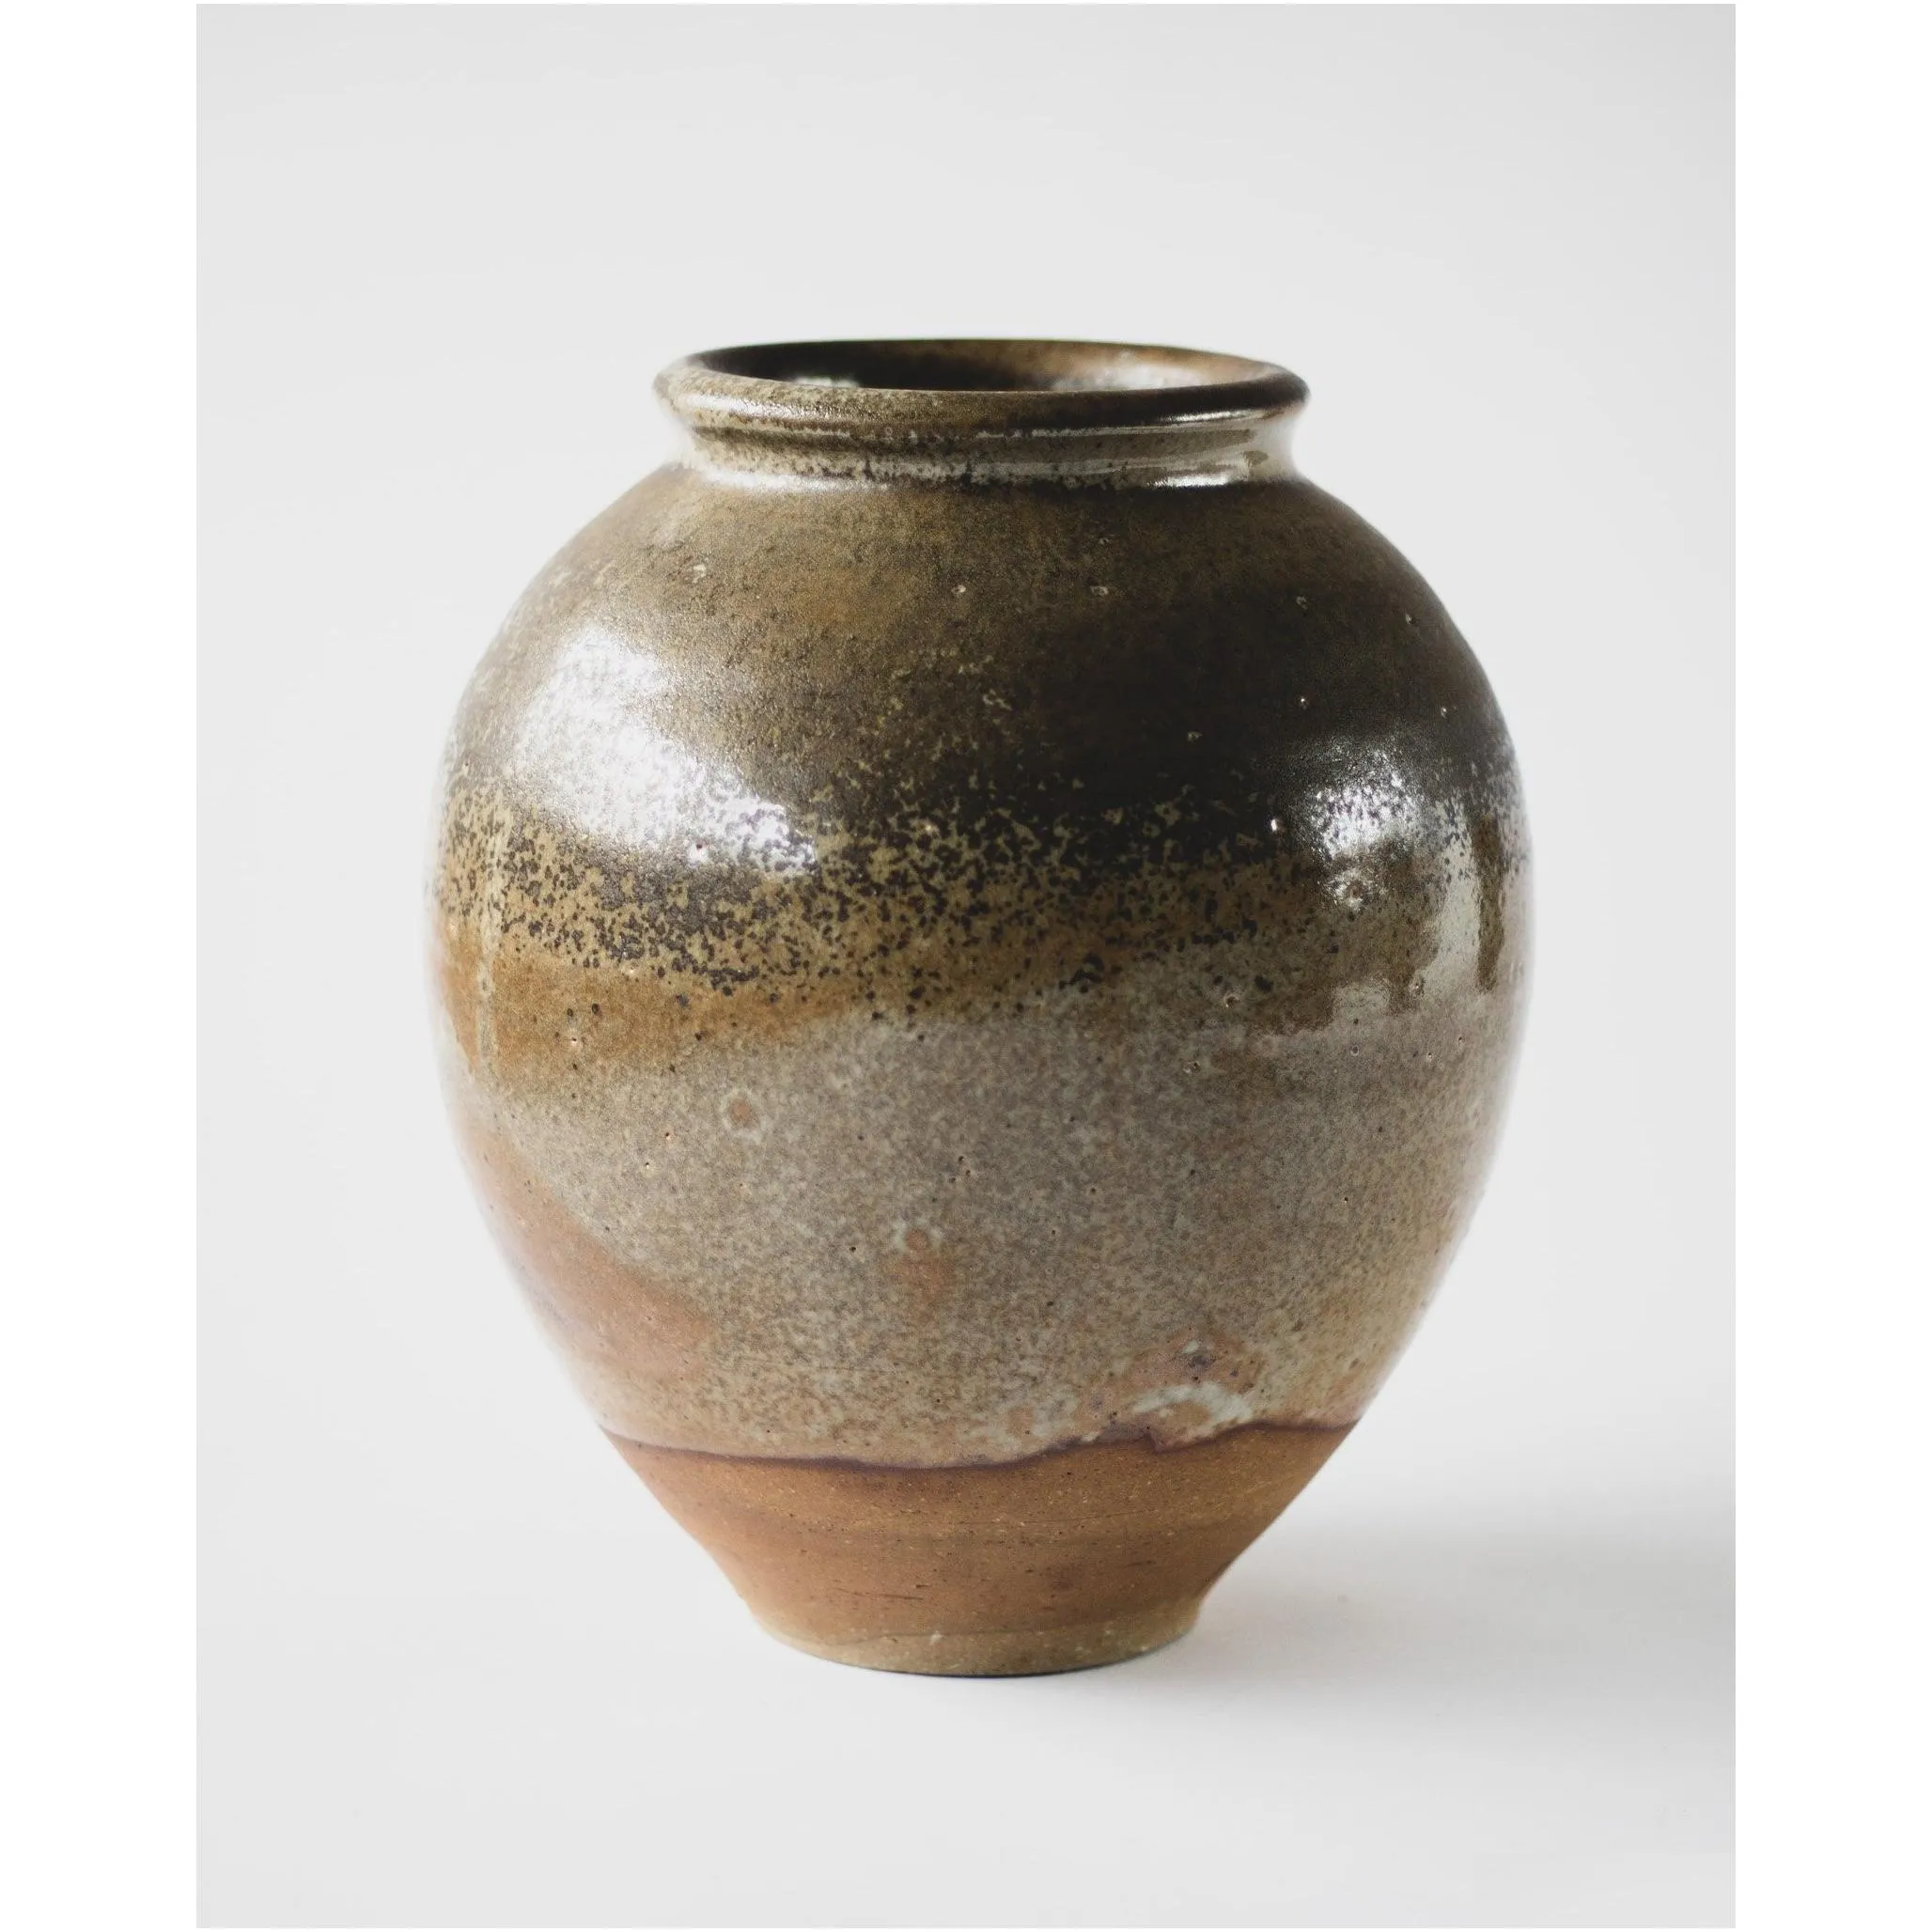 Vases Ceramic Vase With Iron Oxide Glaze Vintage Studio Y Large Decorative Wabi Sabi Drop Delivery Home Garden Home Decor Otlzn